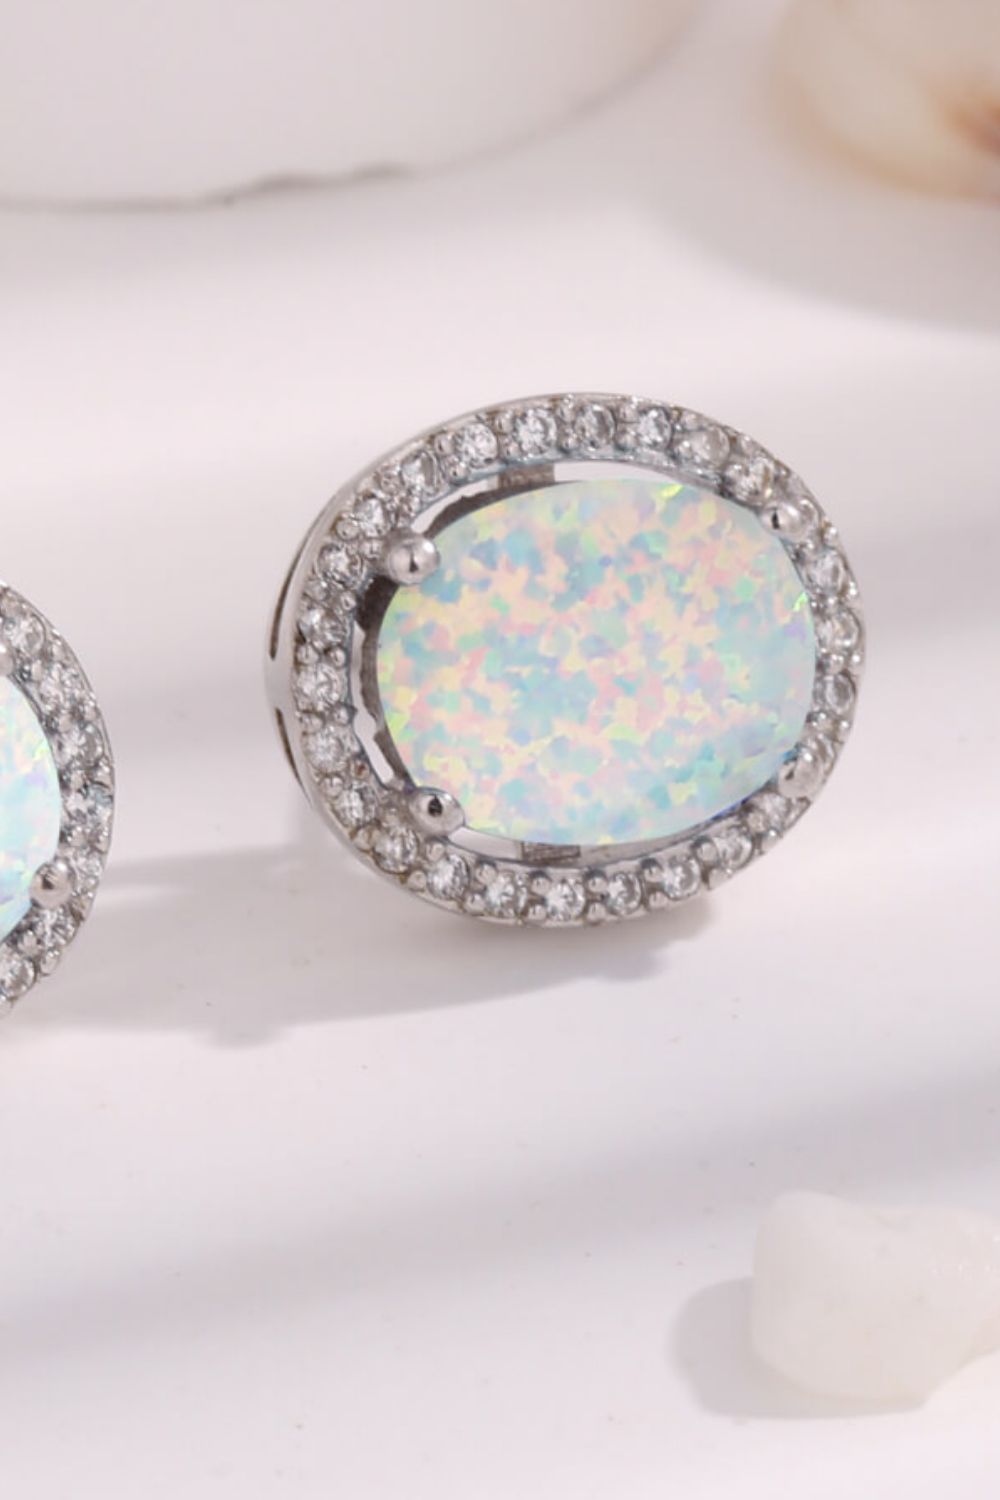 Opal Round Earrings - Earrings - FITGGINS